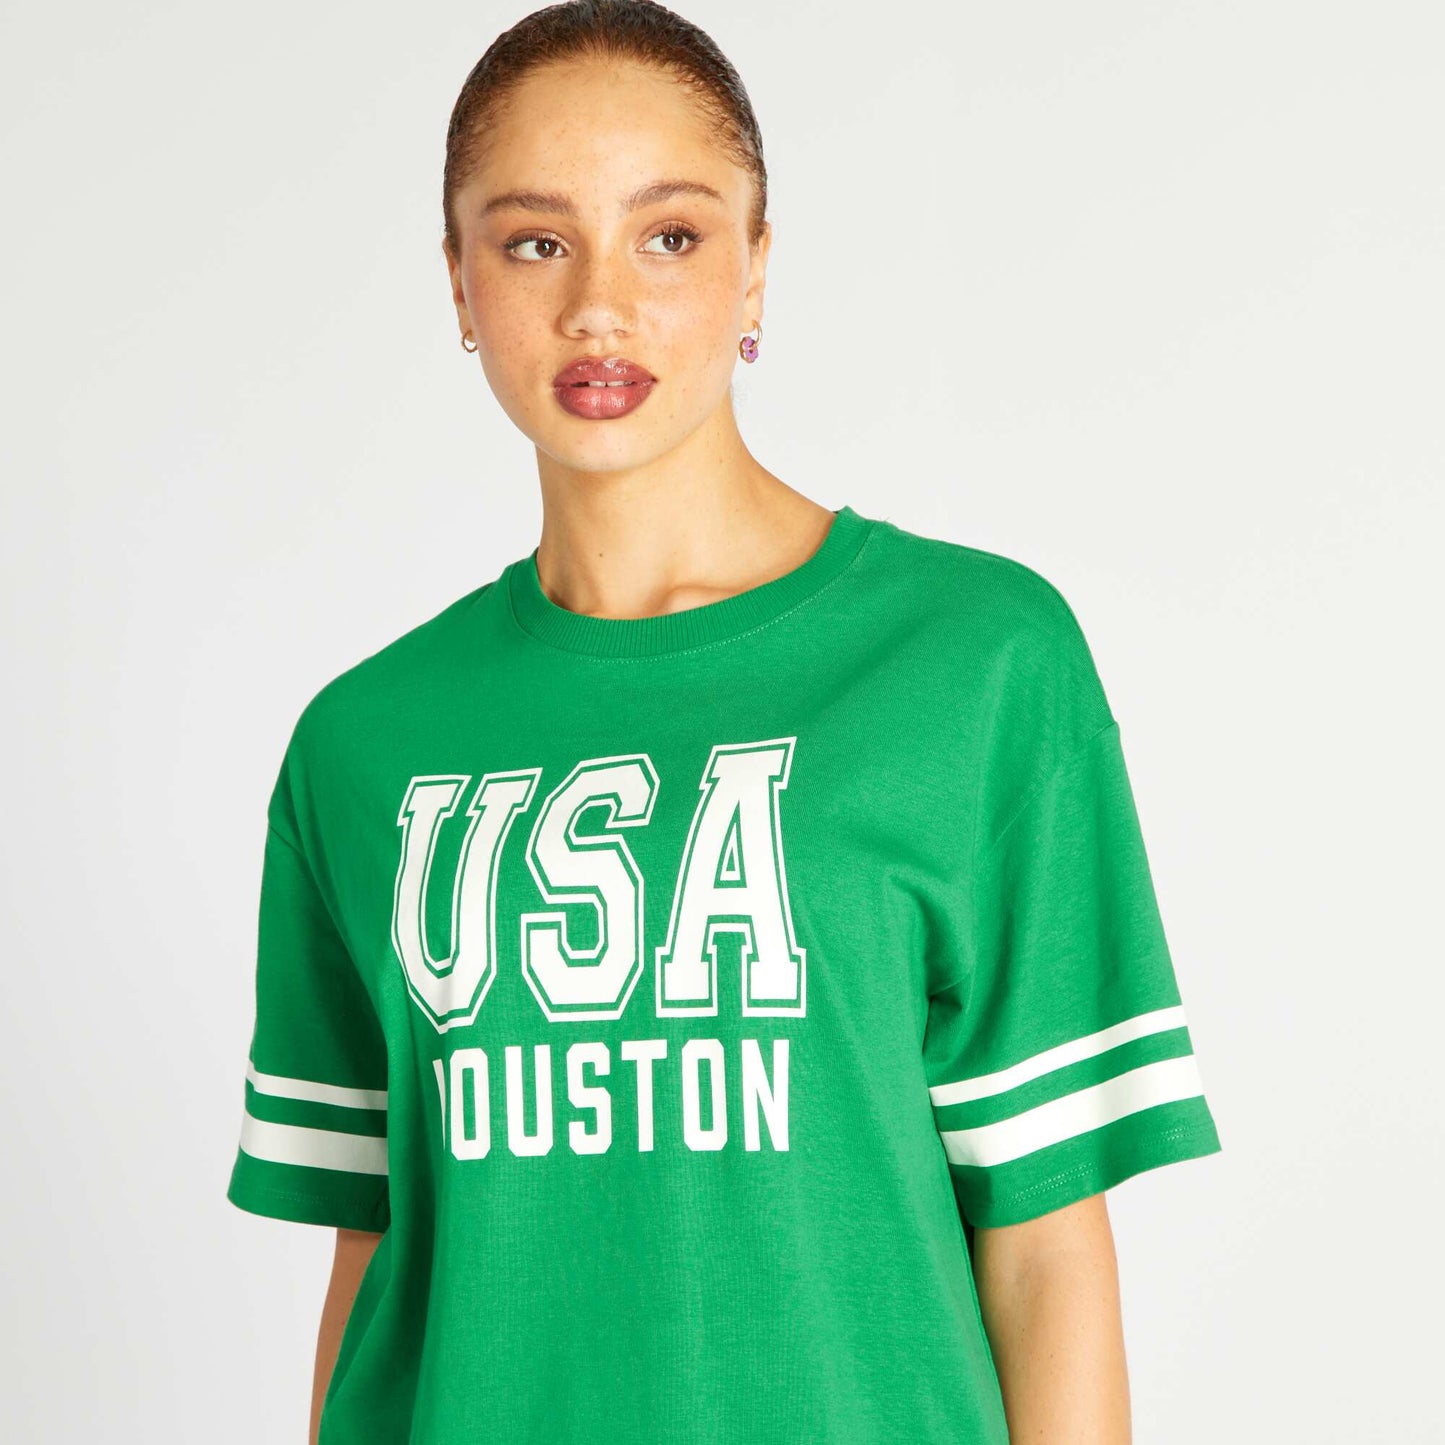 Houston short-sleeved T-shirt GREENPMA3